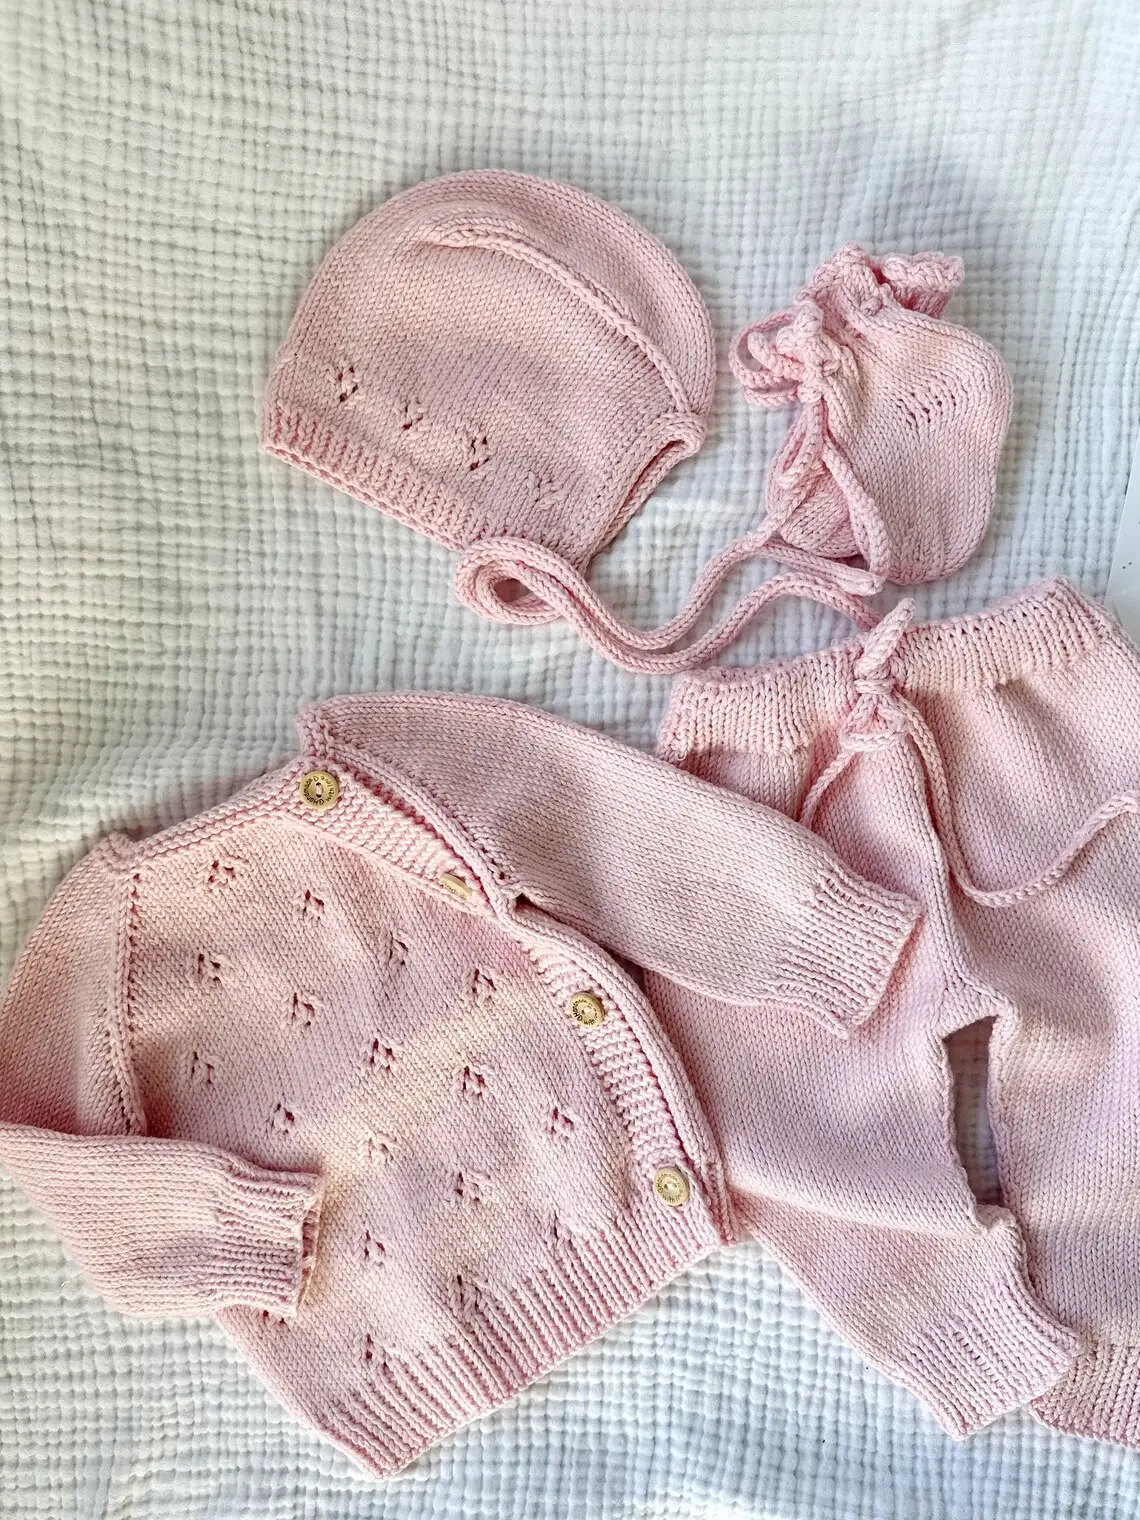 Neugeborene Baumwolle Cardigan Kimono Top Hose Set Frühling Baby 4pcs Baumwolle Outfit Beanie Booties Set